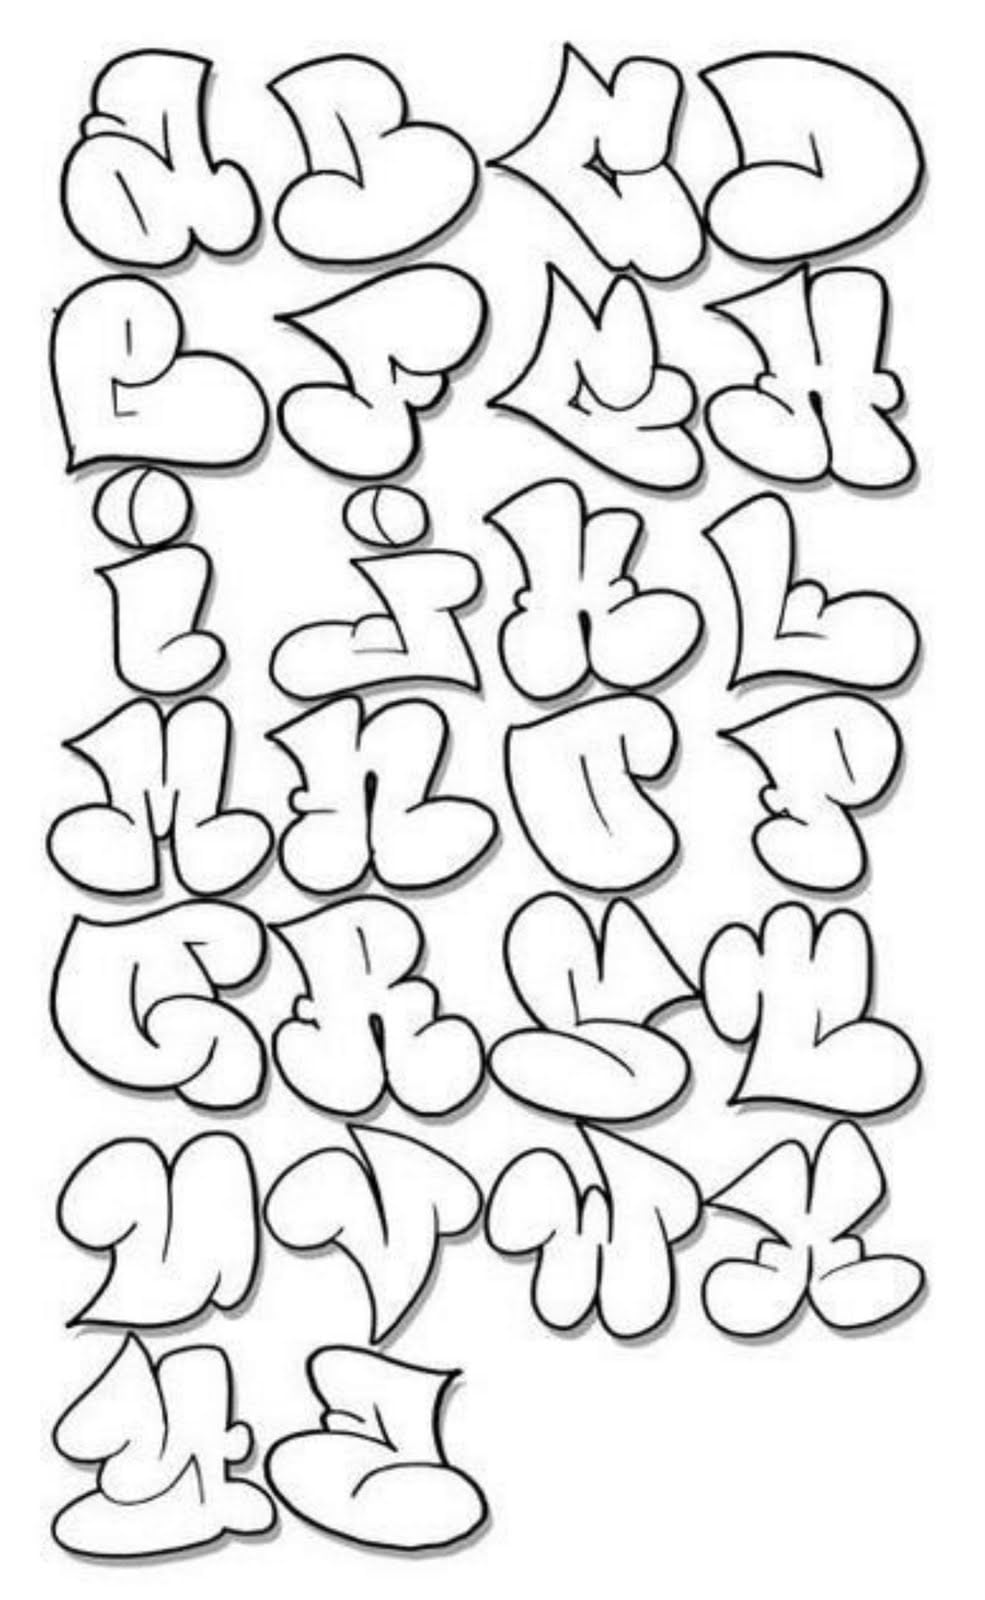 Graffiti, 3d Alphabet And Letters On Pinterest